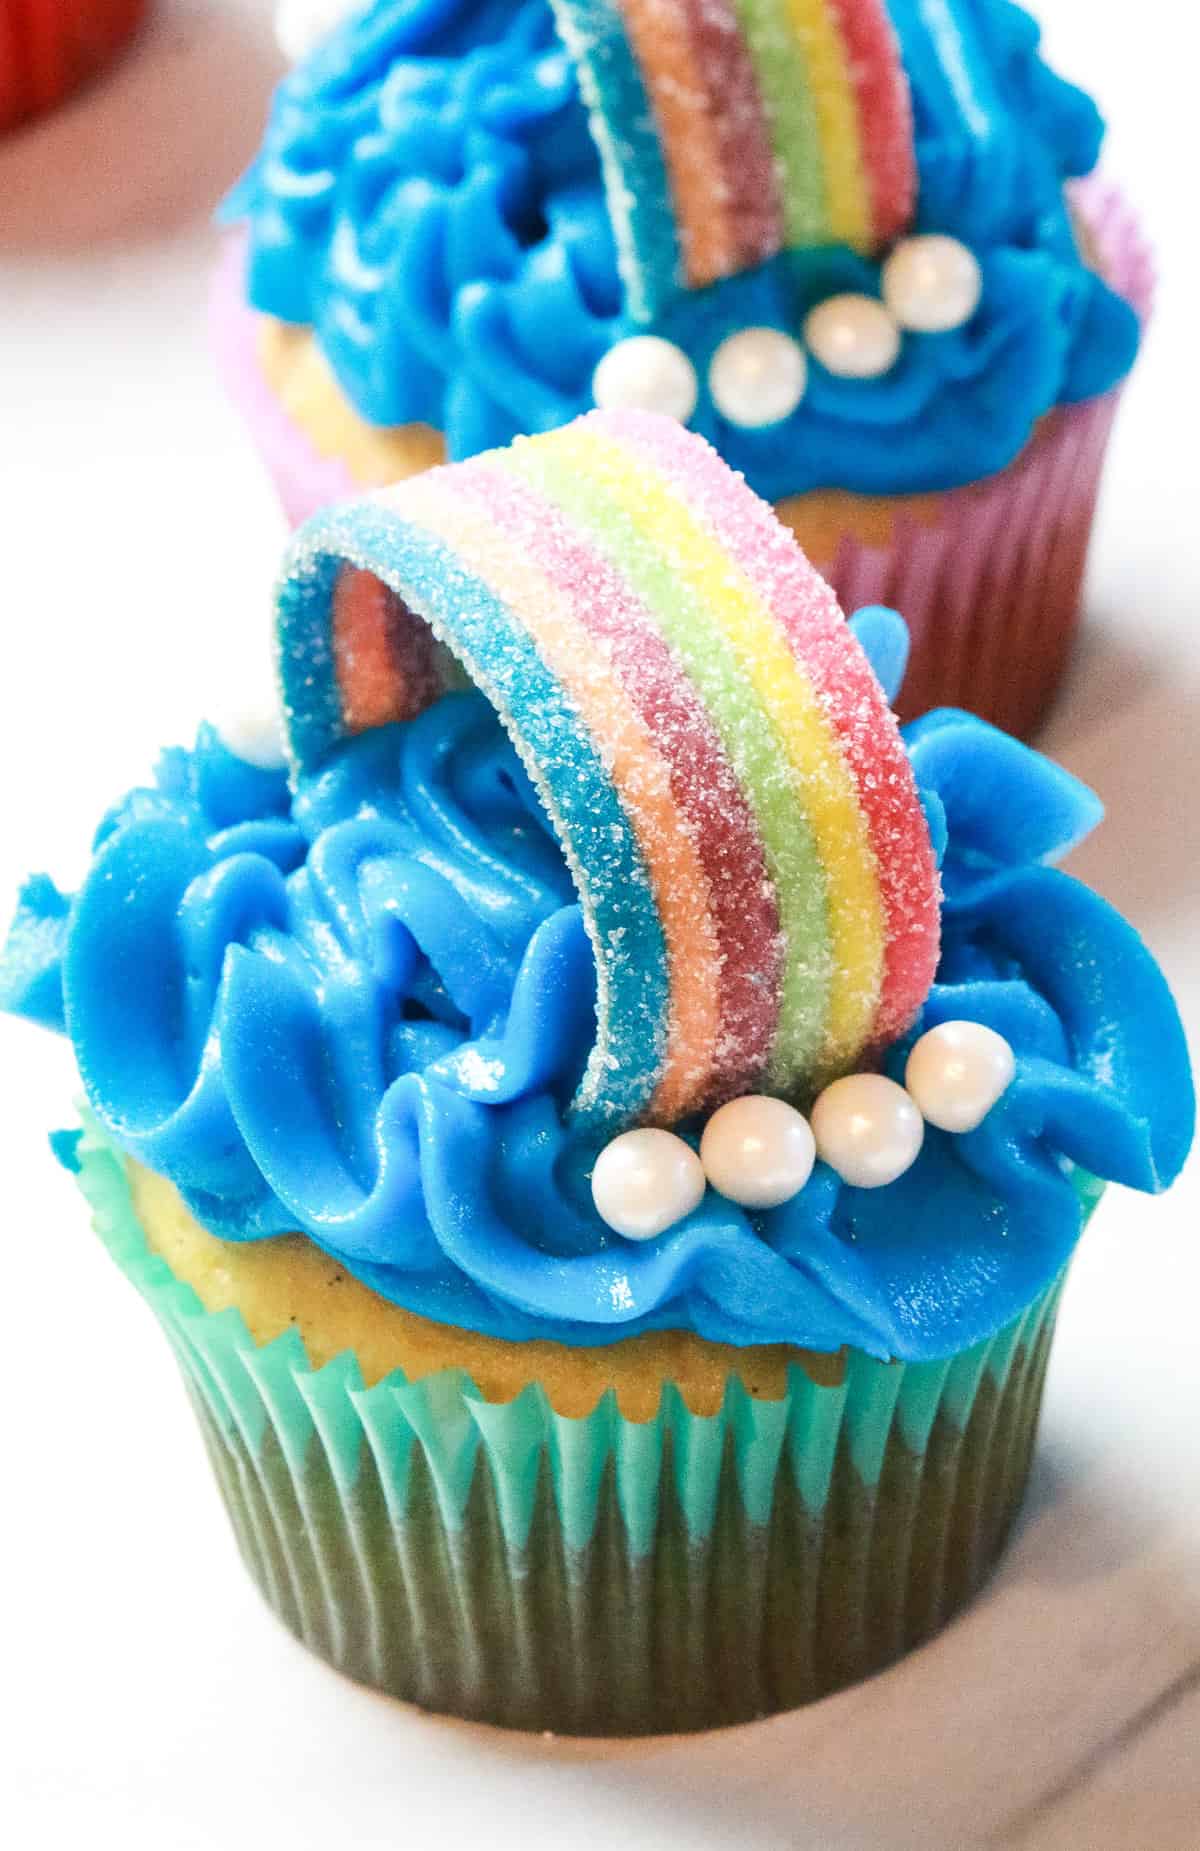 Main image of rainbow cupcakes